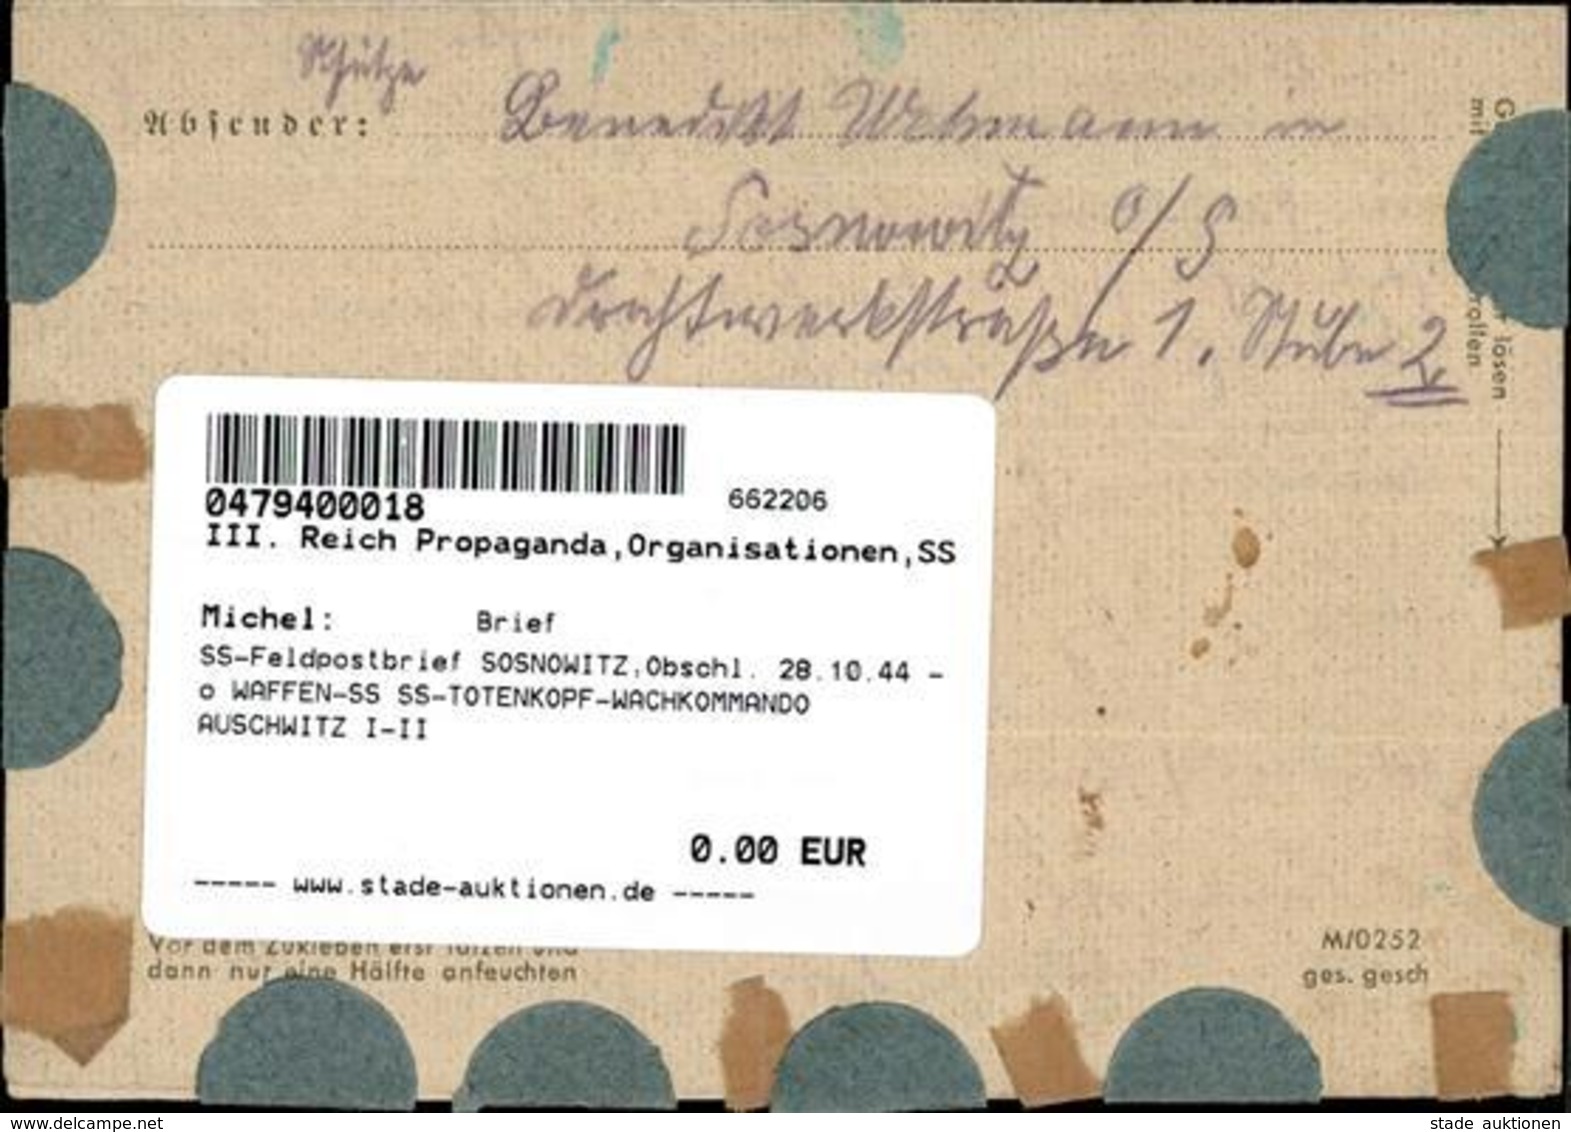 SS-Feldpostbrief SOSNOWITZ,Obschl. 28.10.44 - O WAFFEN-SS SS-TOTENKOPF-WACHKOMMANDO AUSCHWITZ I-II - Weltkrieg 1939-45